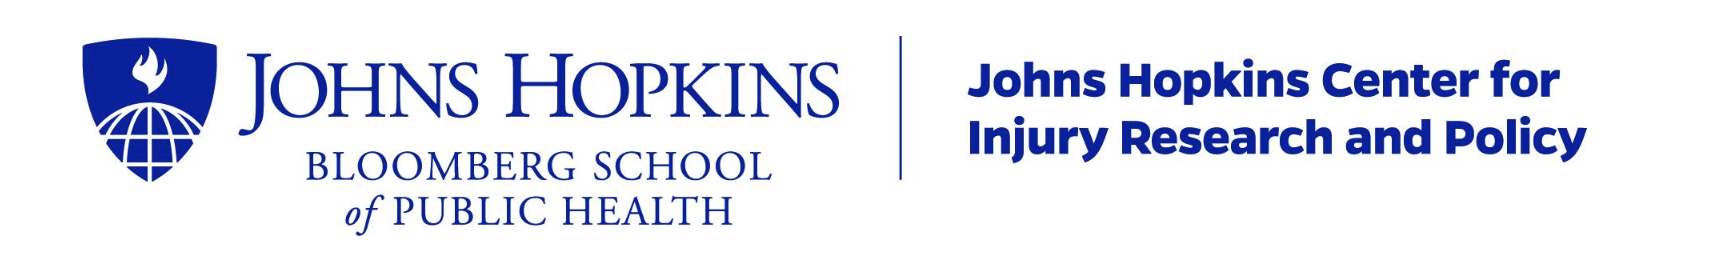 John Hopkins Logo detail image